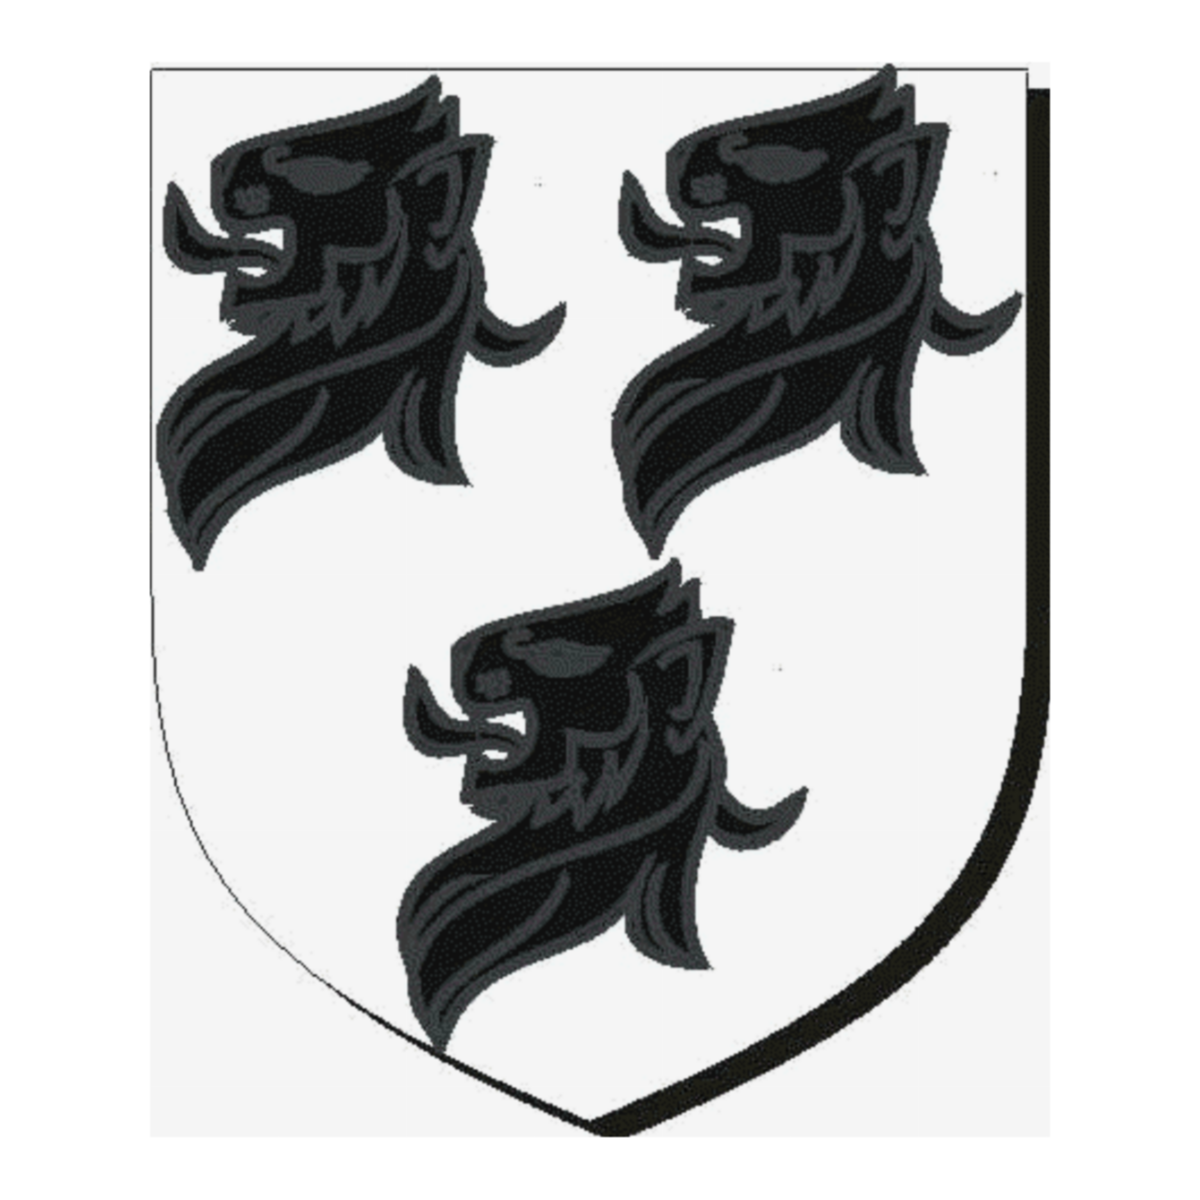 Coat of arms of familyMorton